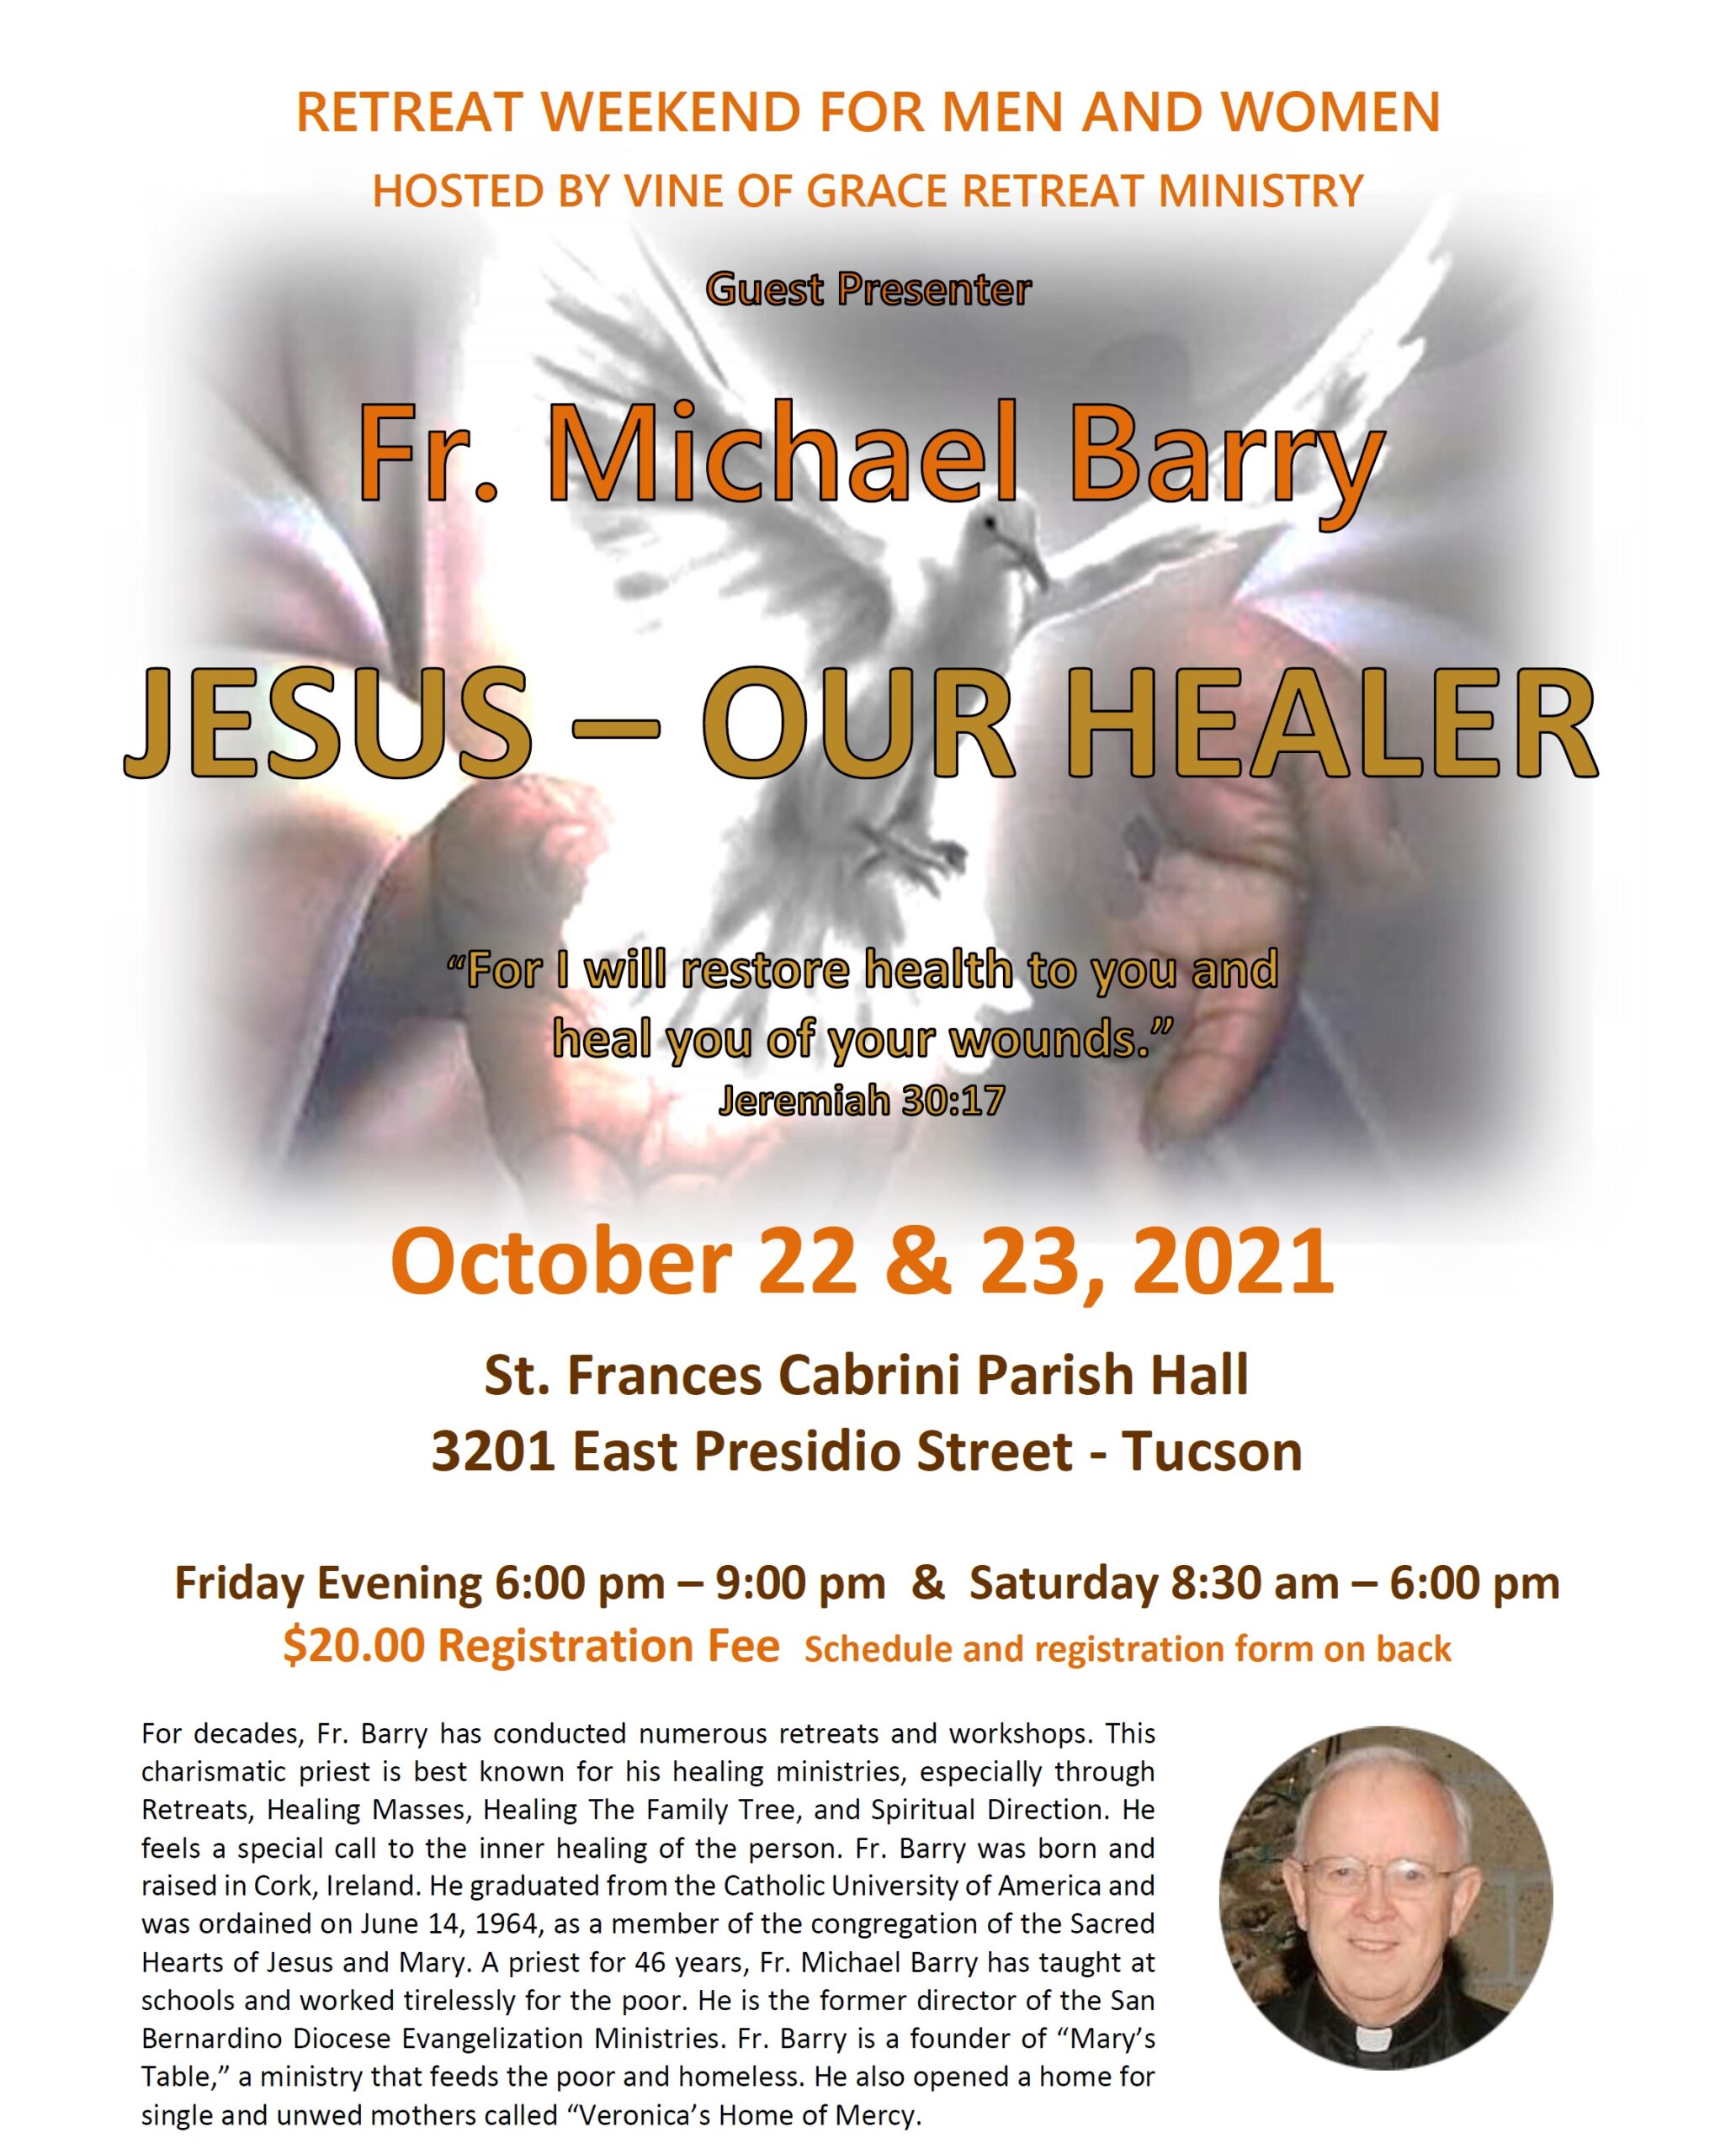 Jesus Our Healer retreat 2021-10-22